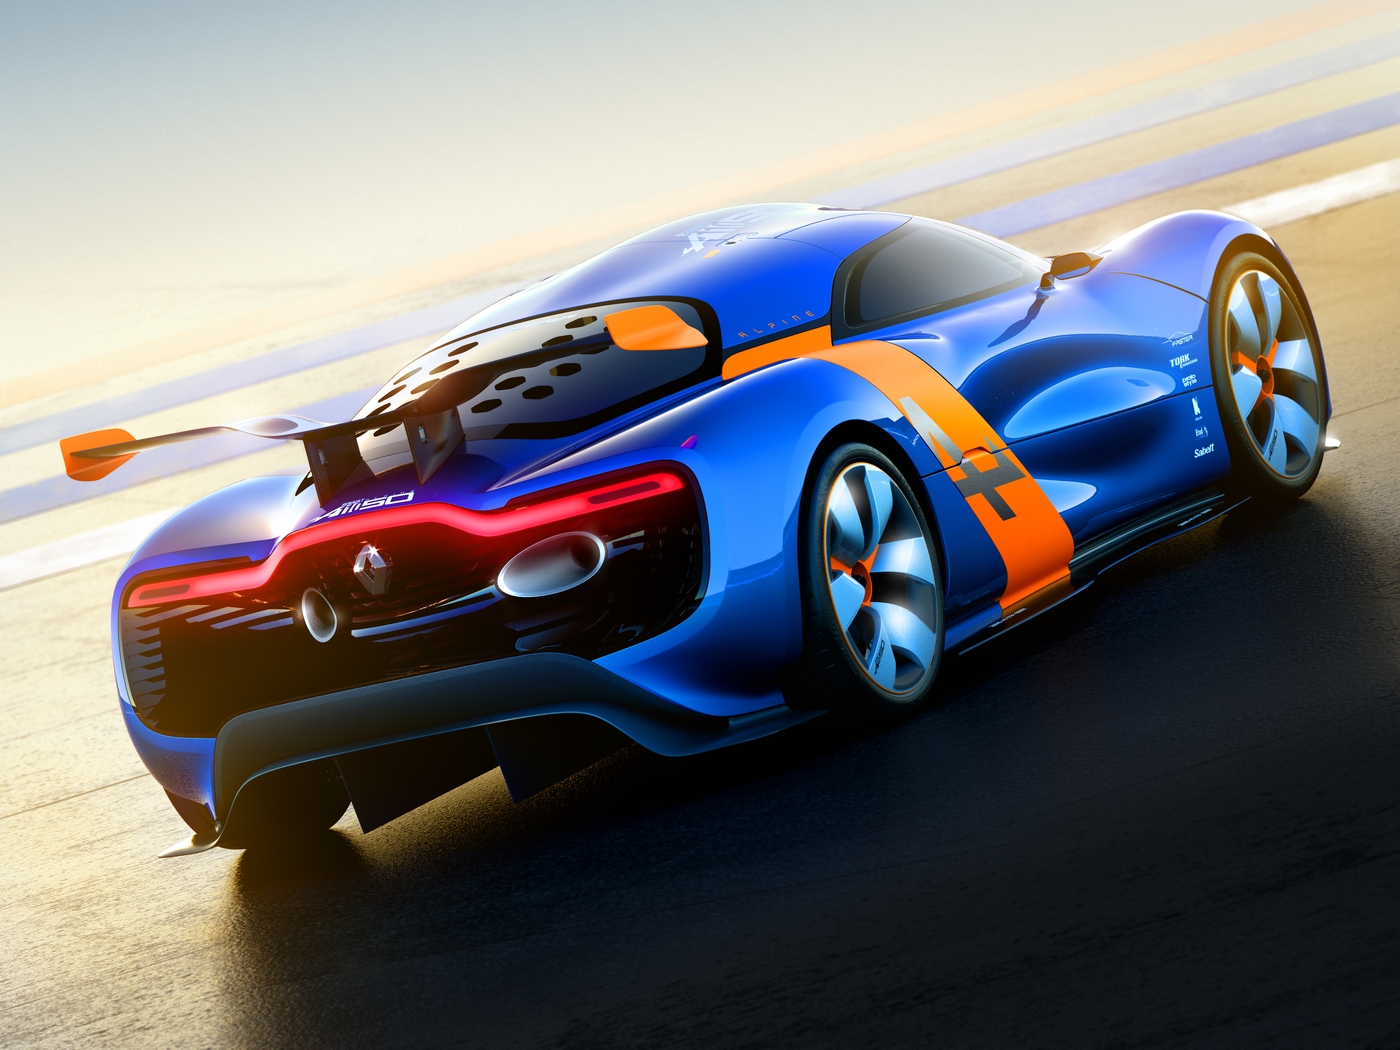 Image: Renault, Alpine, A110-50, Renault Alpine, blue, sports, coupe, sports car